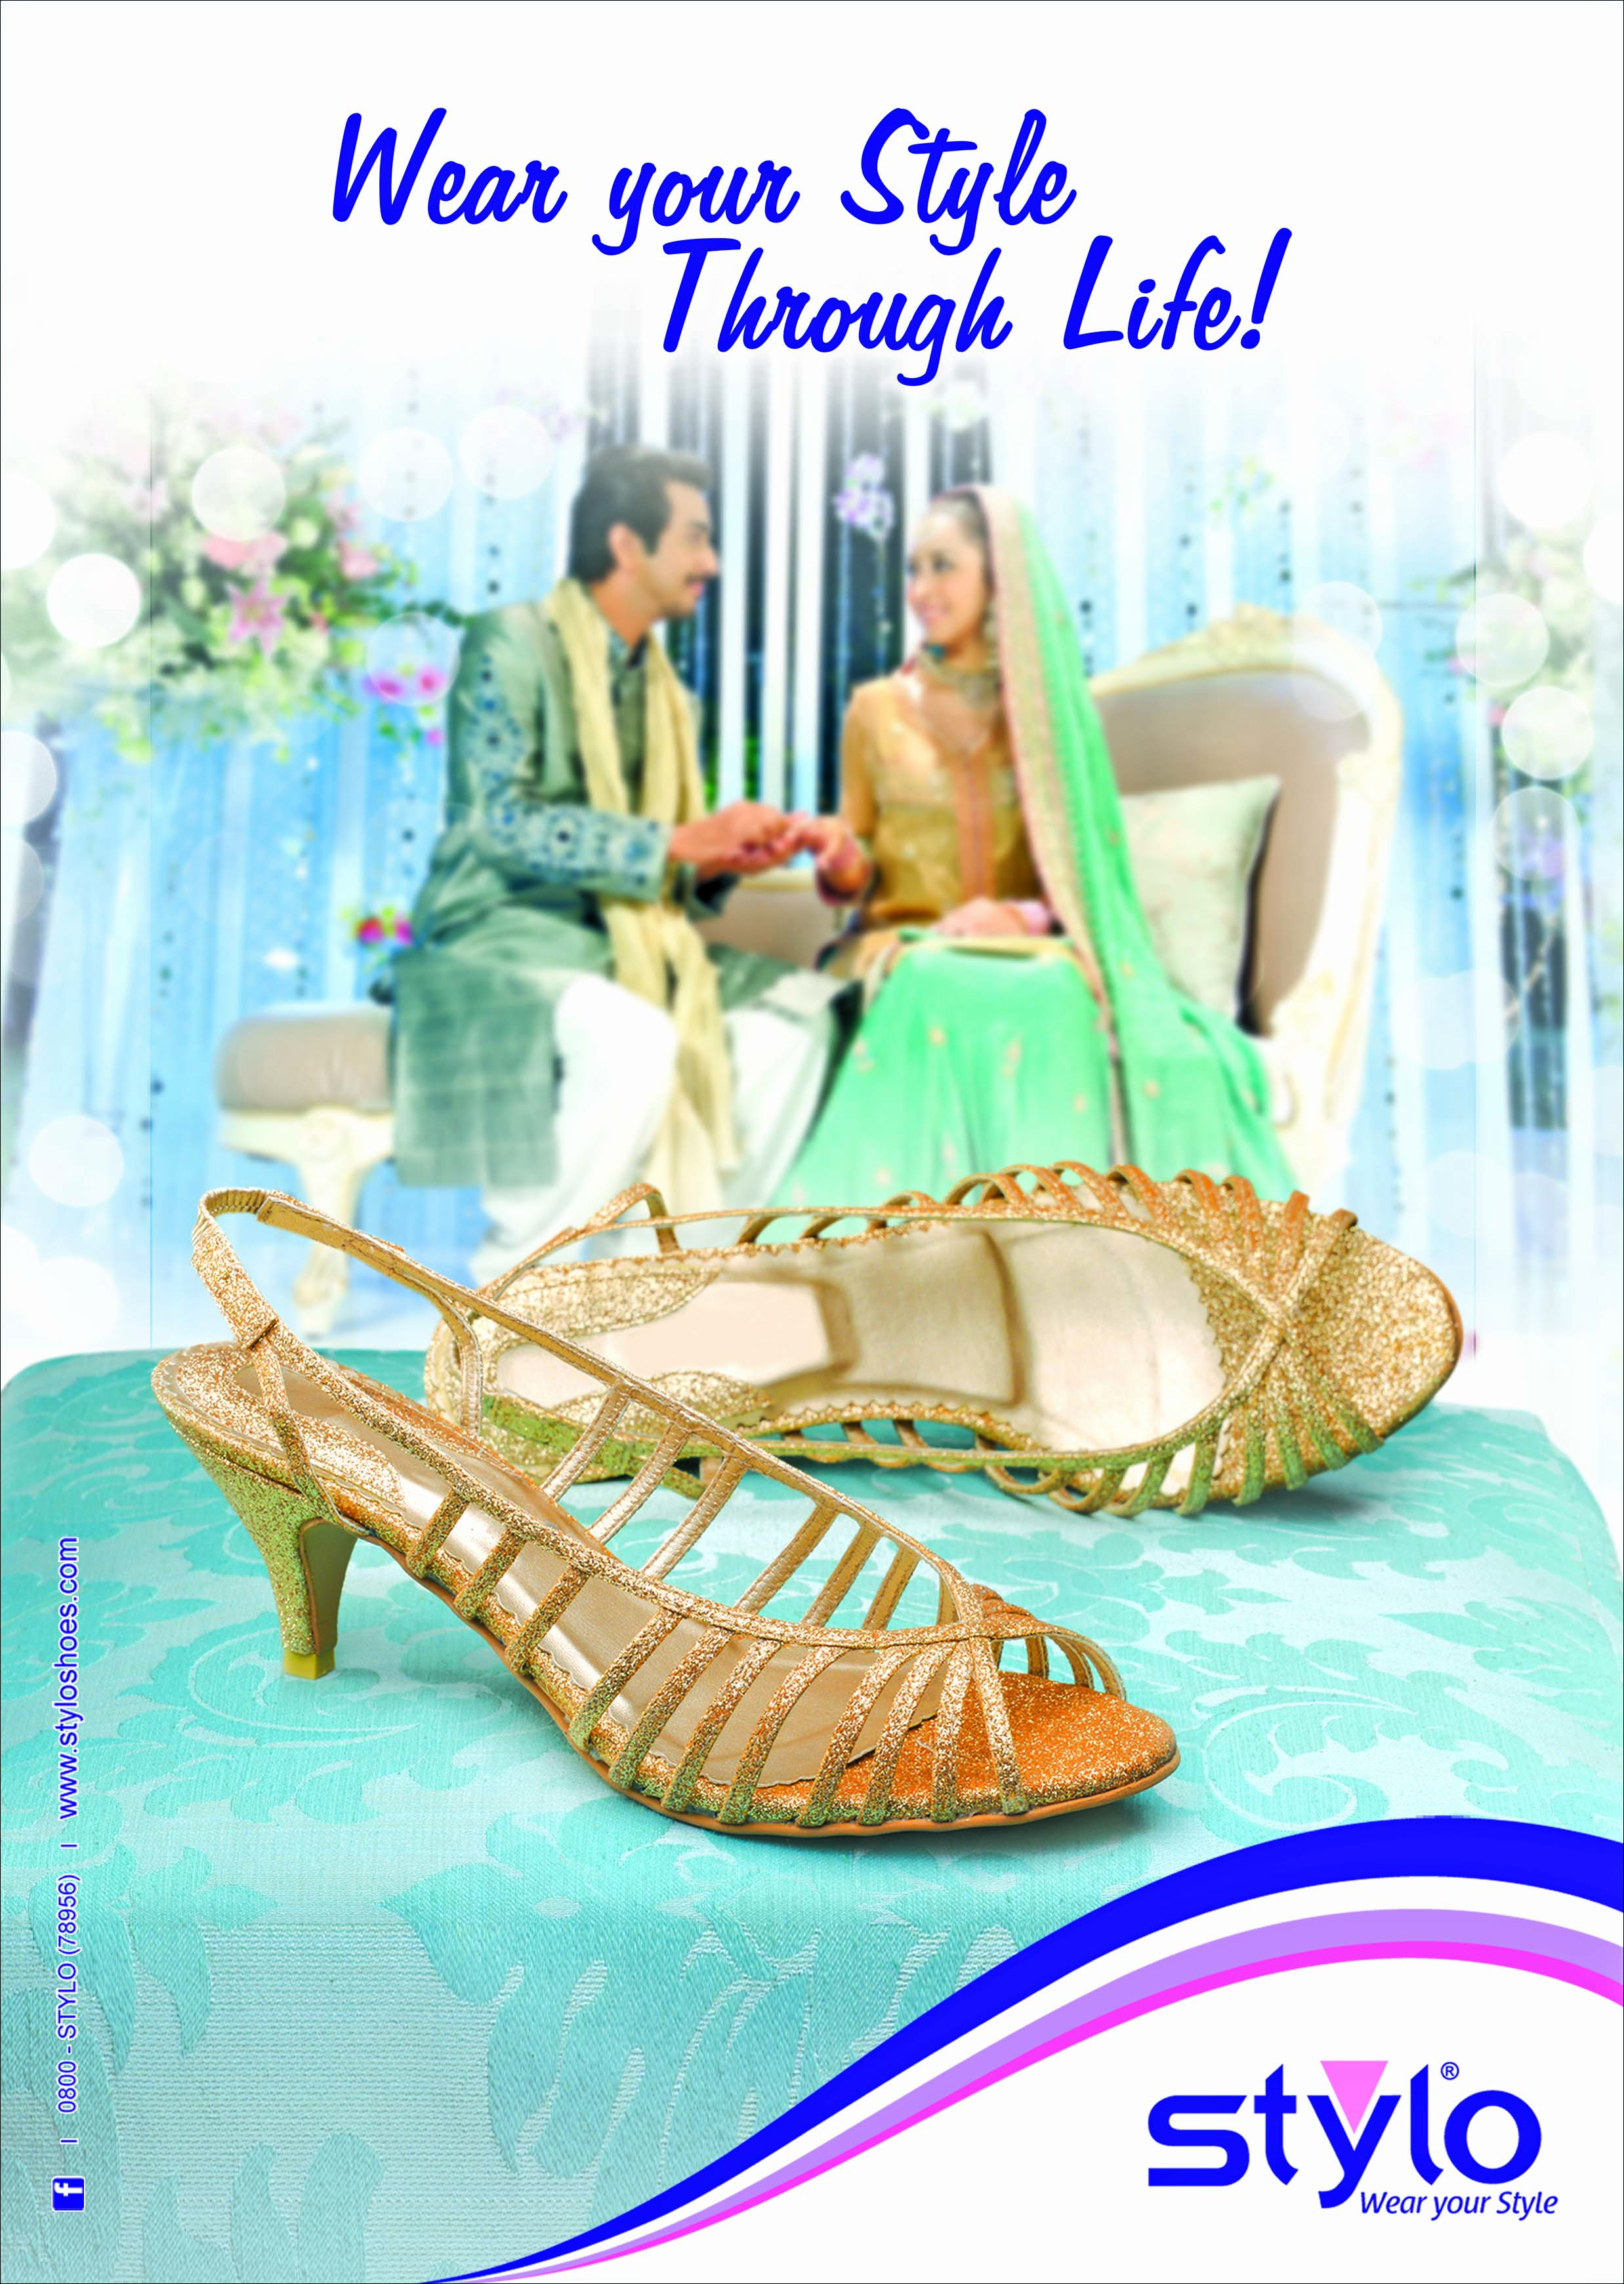 Stylo Shoes Pakistan Ad